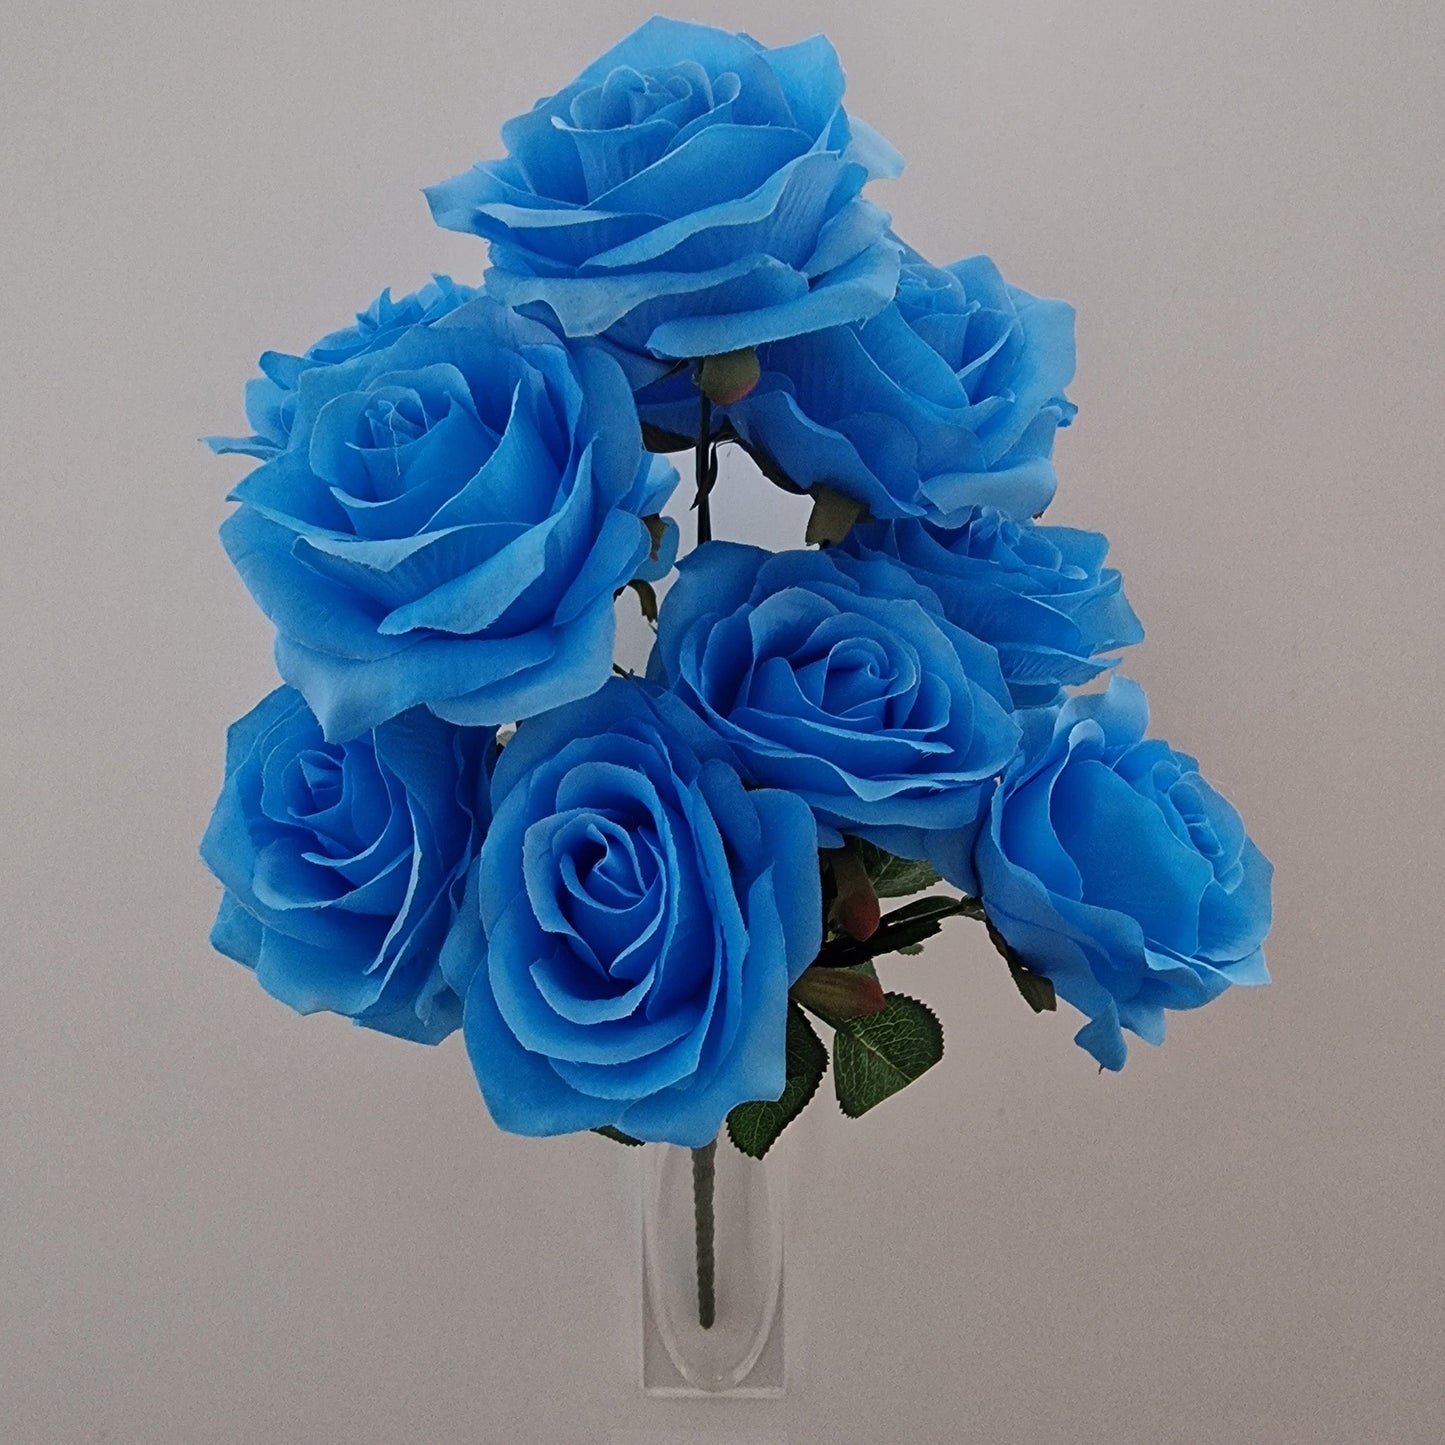 Beautiful Large Open Rose Bouquet in Blue 12 Stems Amor Flowers - Amor Flowers